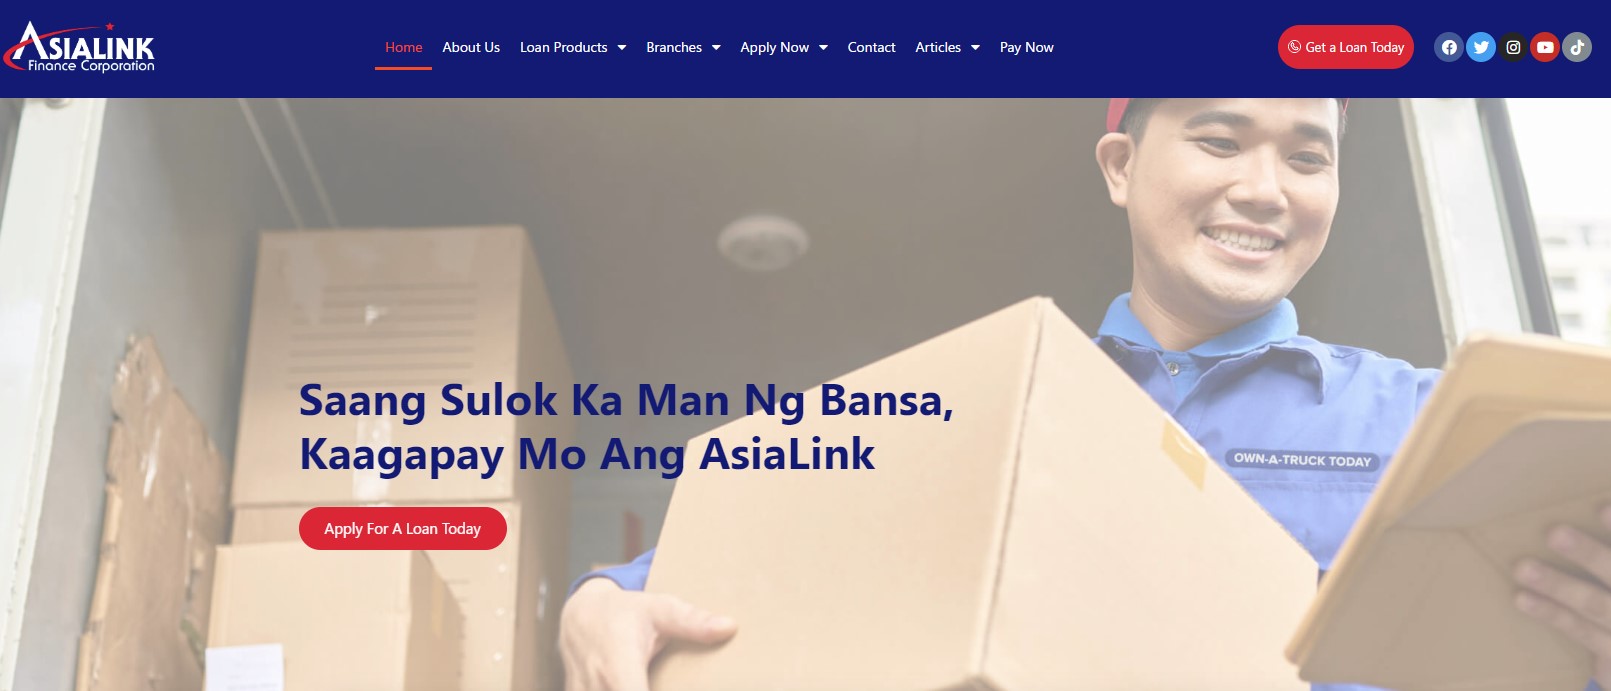 online loans philippines - Asialink